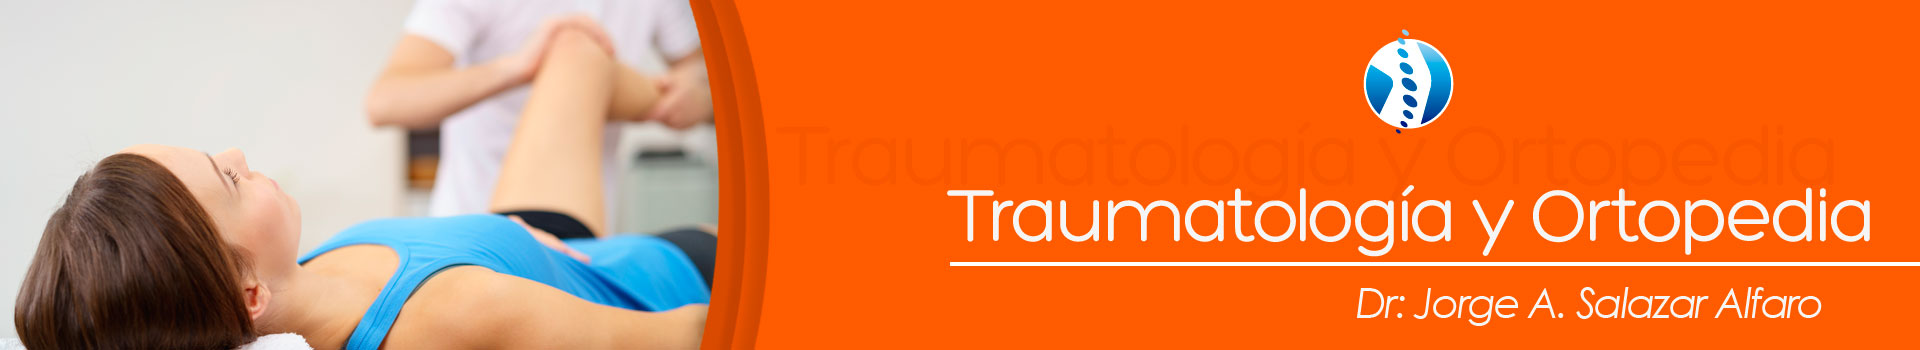 banner-traumatologia-y-ortopedia